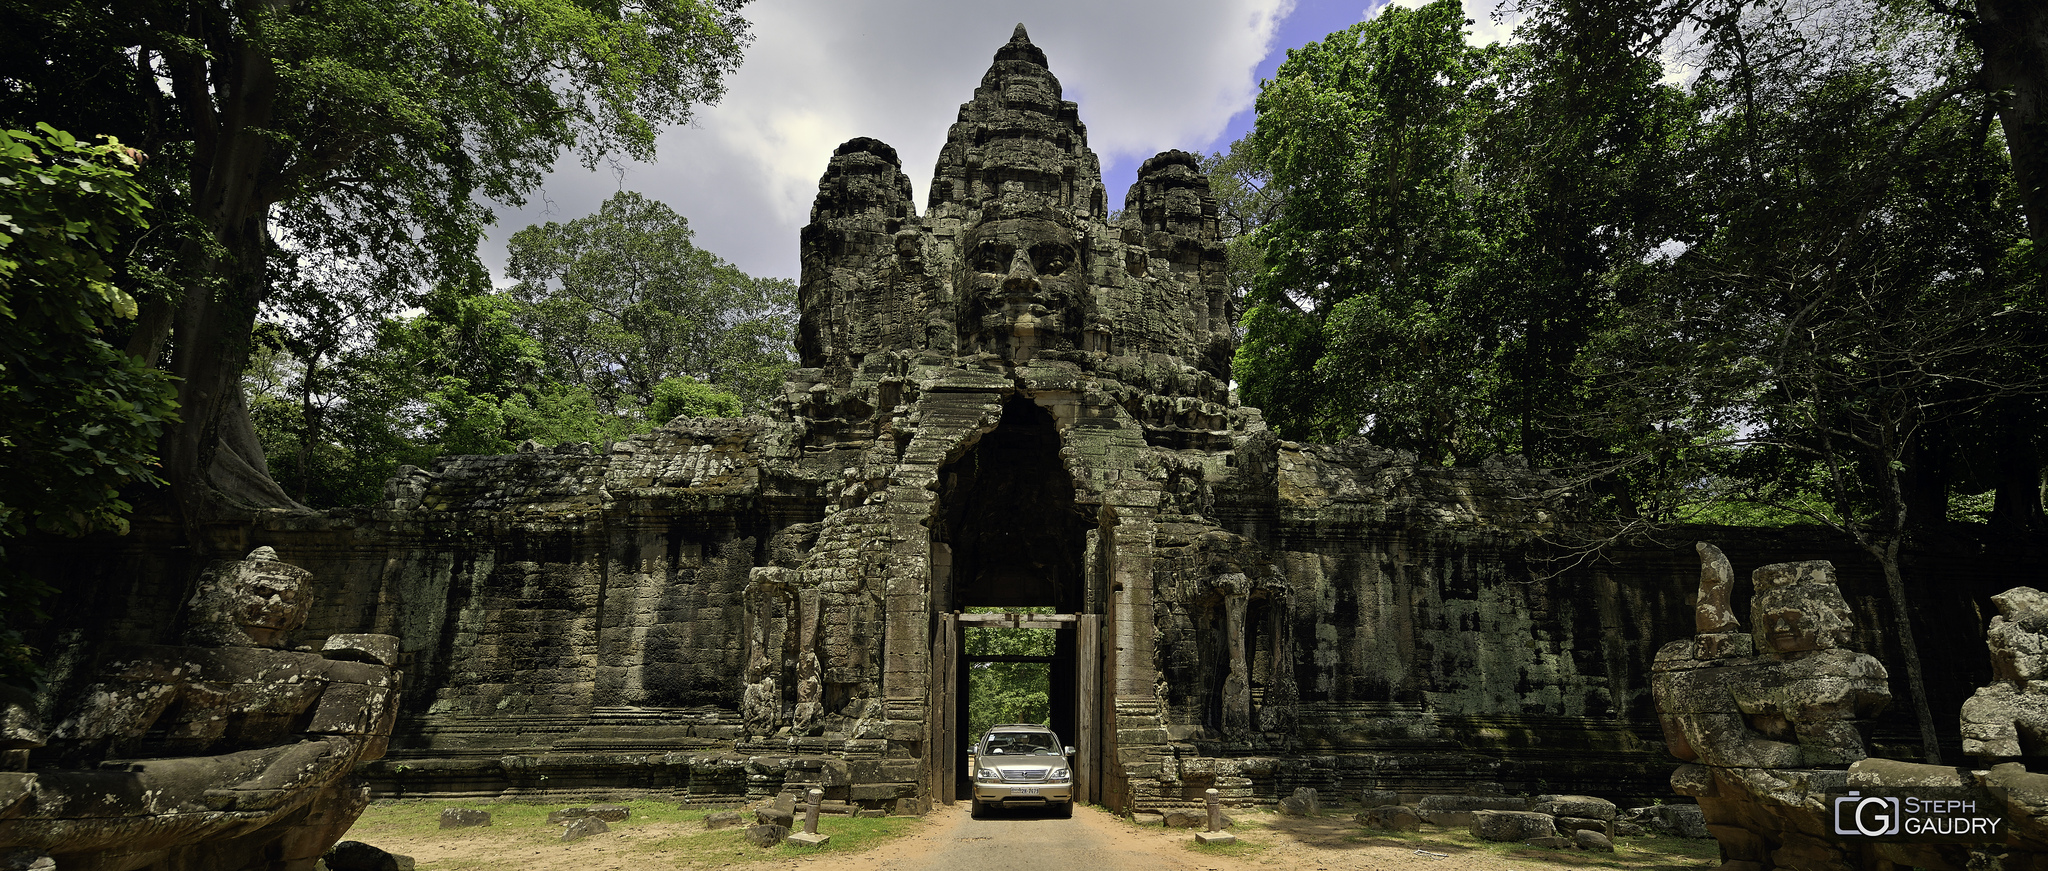 La porte de la victoire, en direction d'Angkor Tom [Klik om de diavoorstelling te starten]